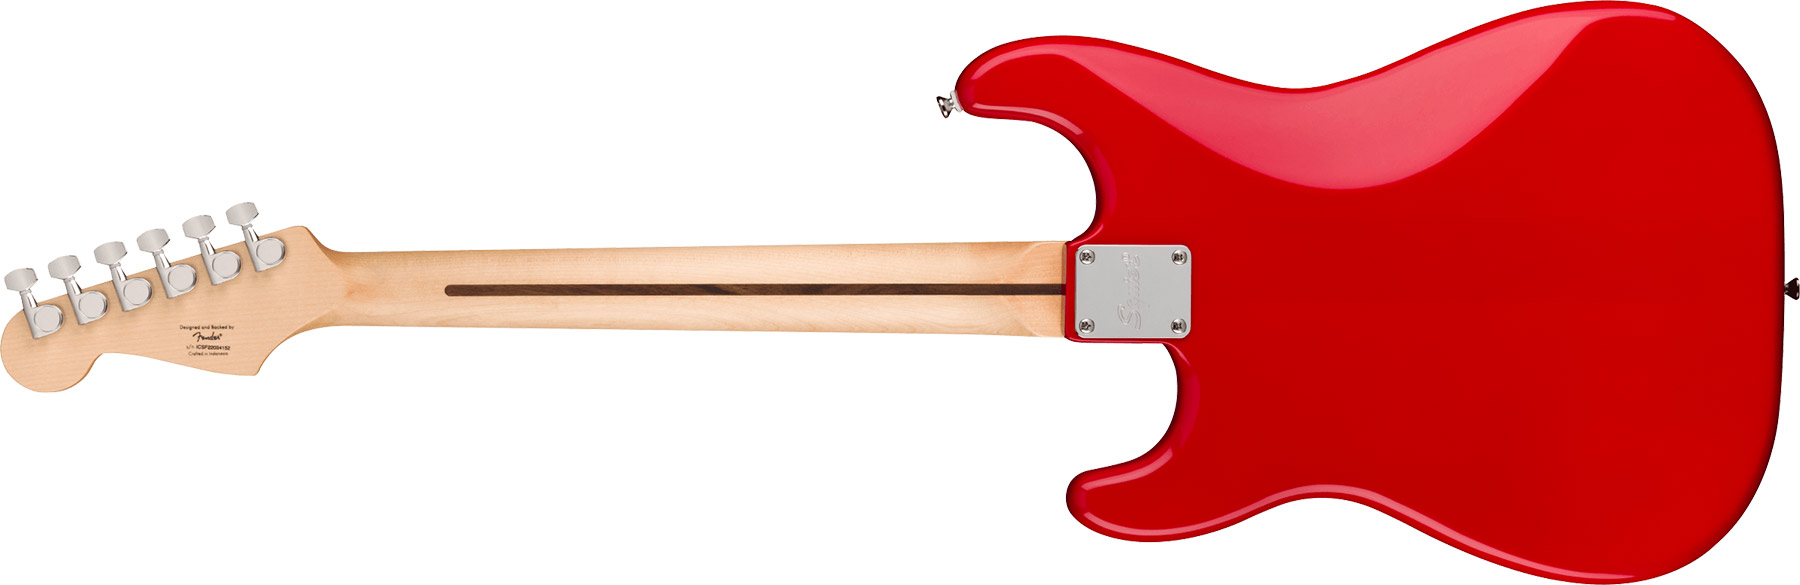 Squier Strat Sonic Hardtail 3s Ht Lau - Torino Red - E-Gitarre in Str-Form - Variation 1